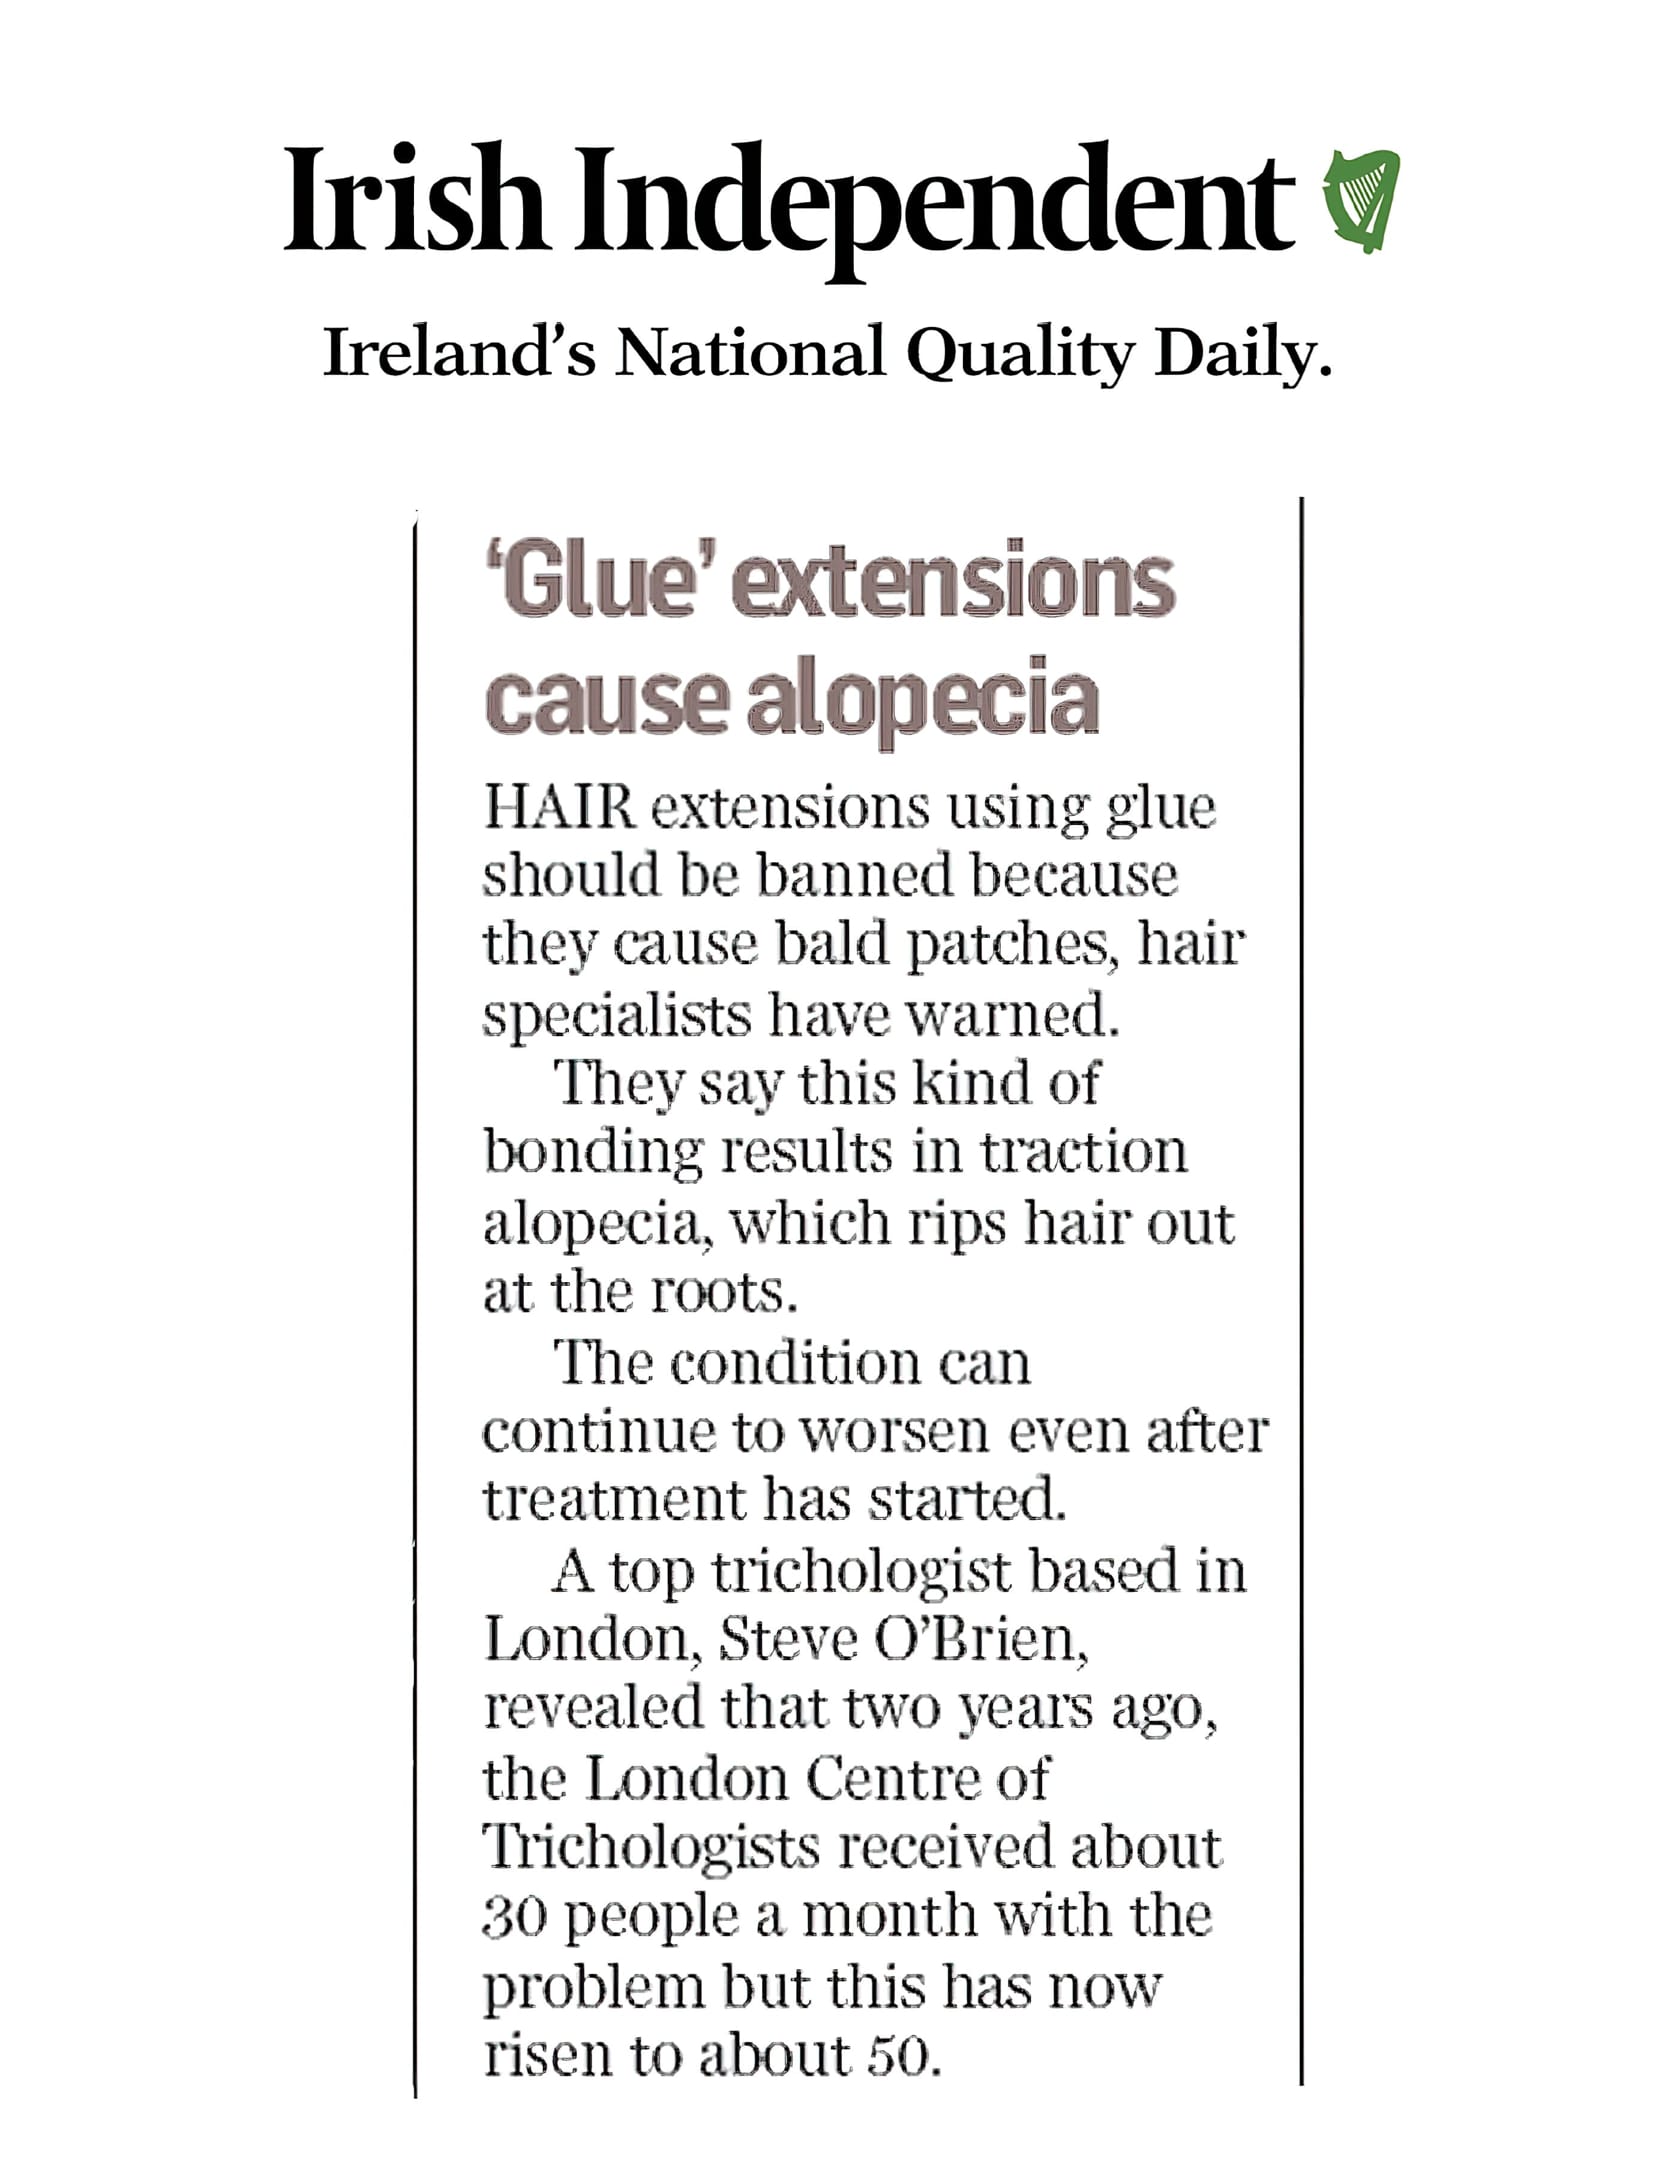 'Glue hair extensions cause alopecia' - BBC & Irish Independent